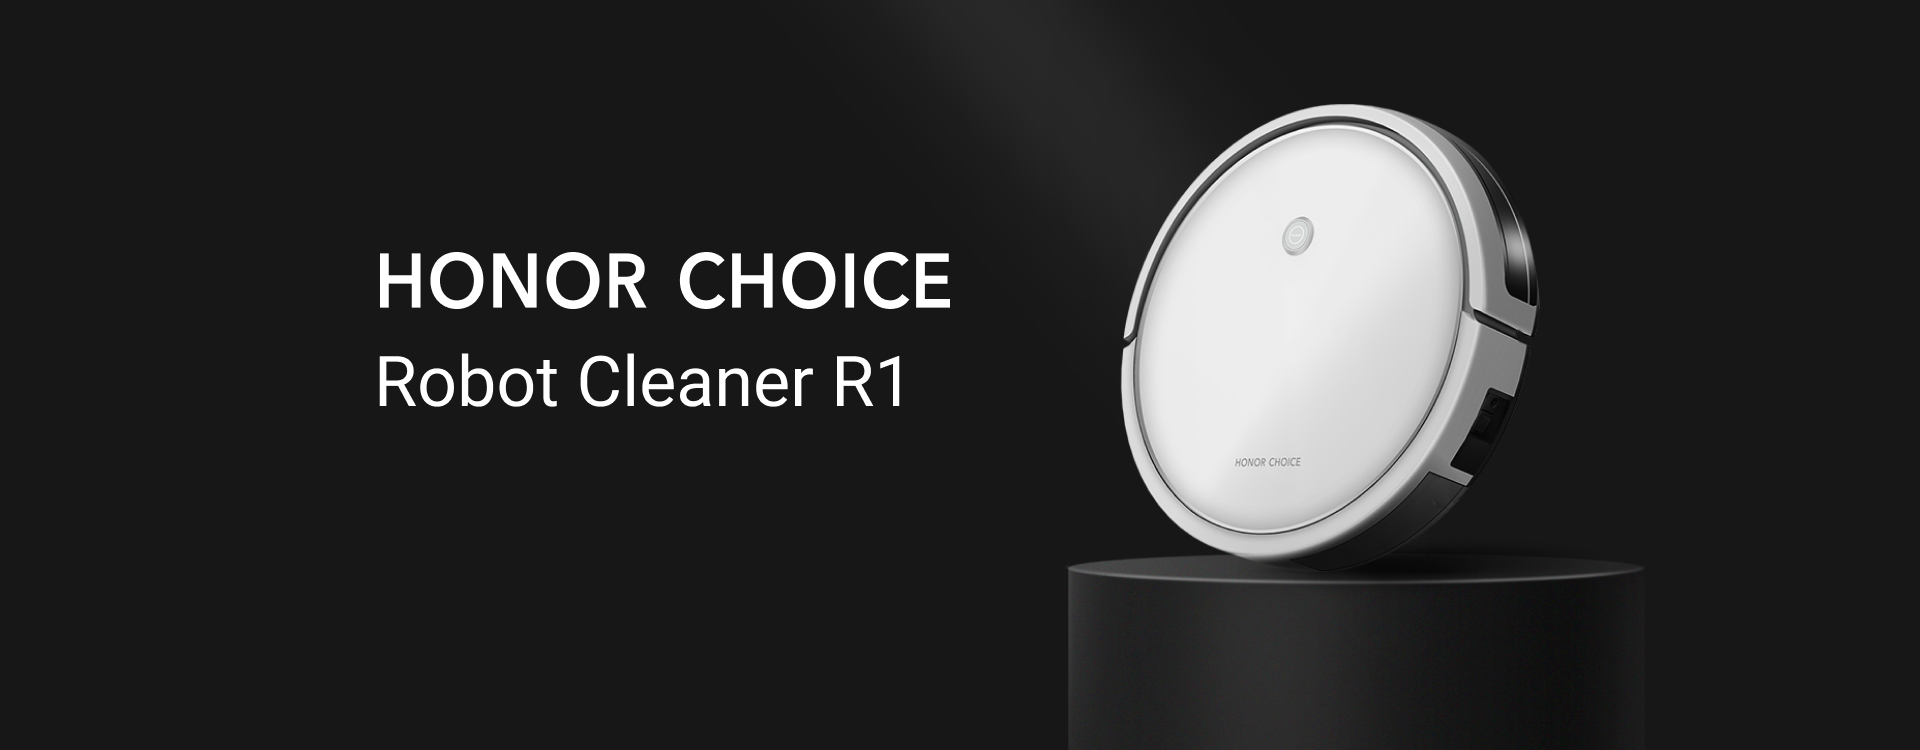 Choice robot clean r1. Робот пылесос хонор choice. Робот-пылесос Honor choice Robot Cleaner r1. Робот пылесос хонор r1. Honor choice Cleaner r1.